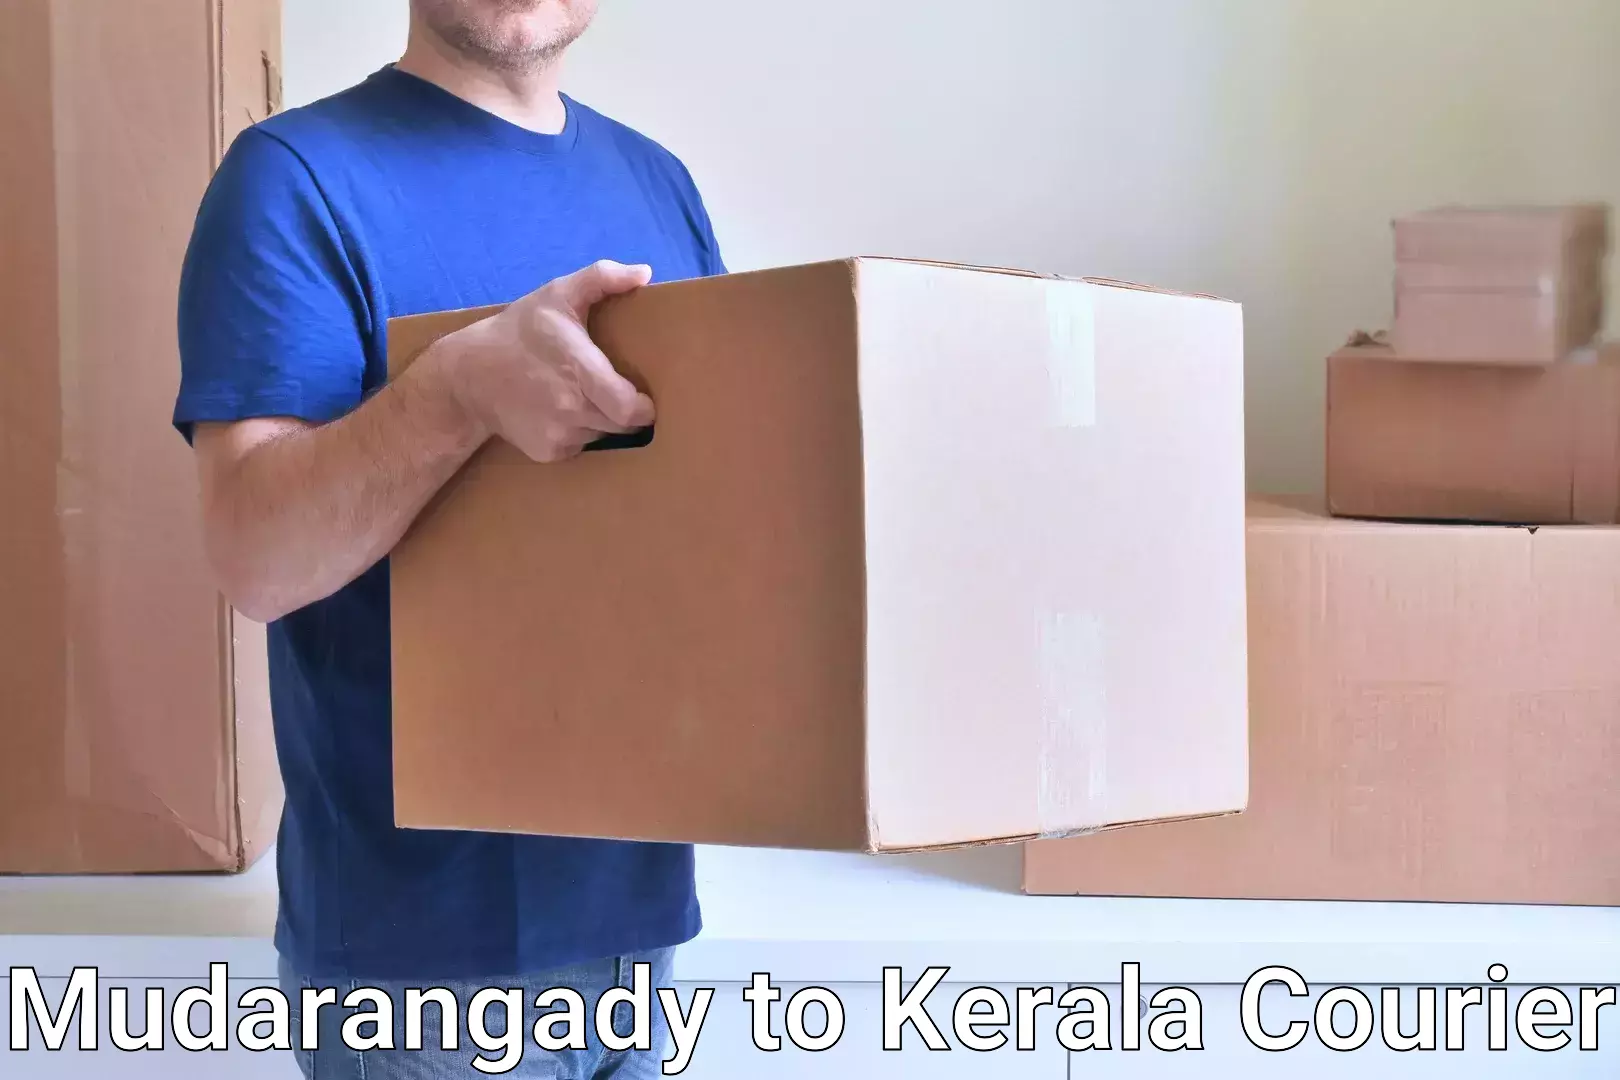 Advanced tracking systems Mudarangady to Kerala